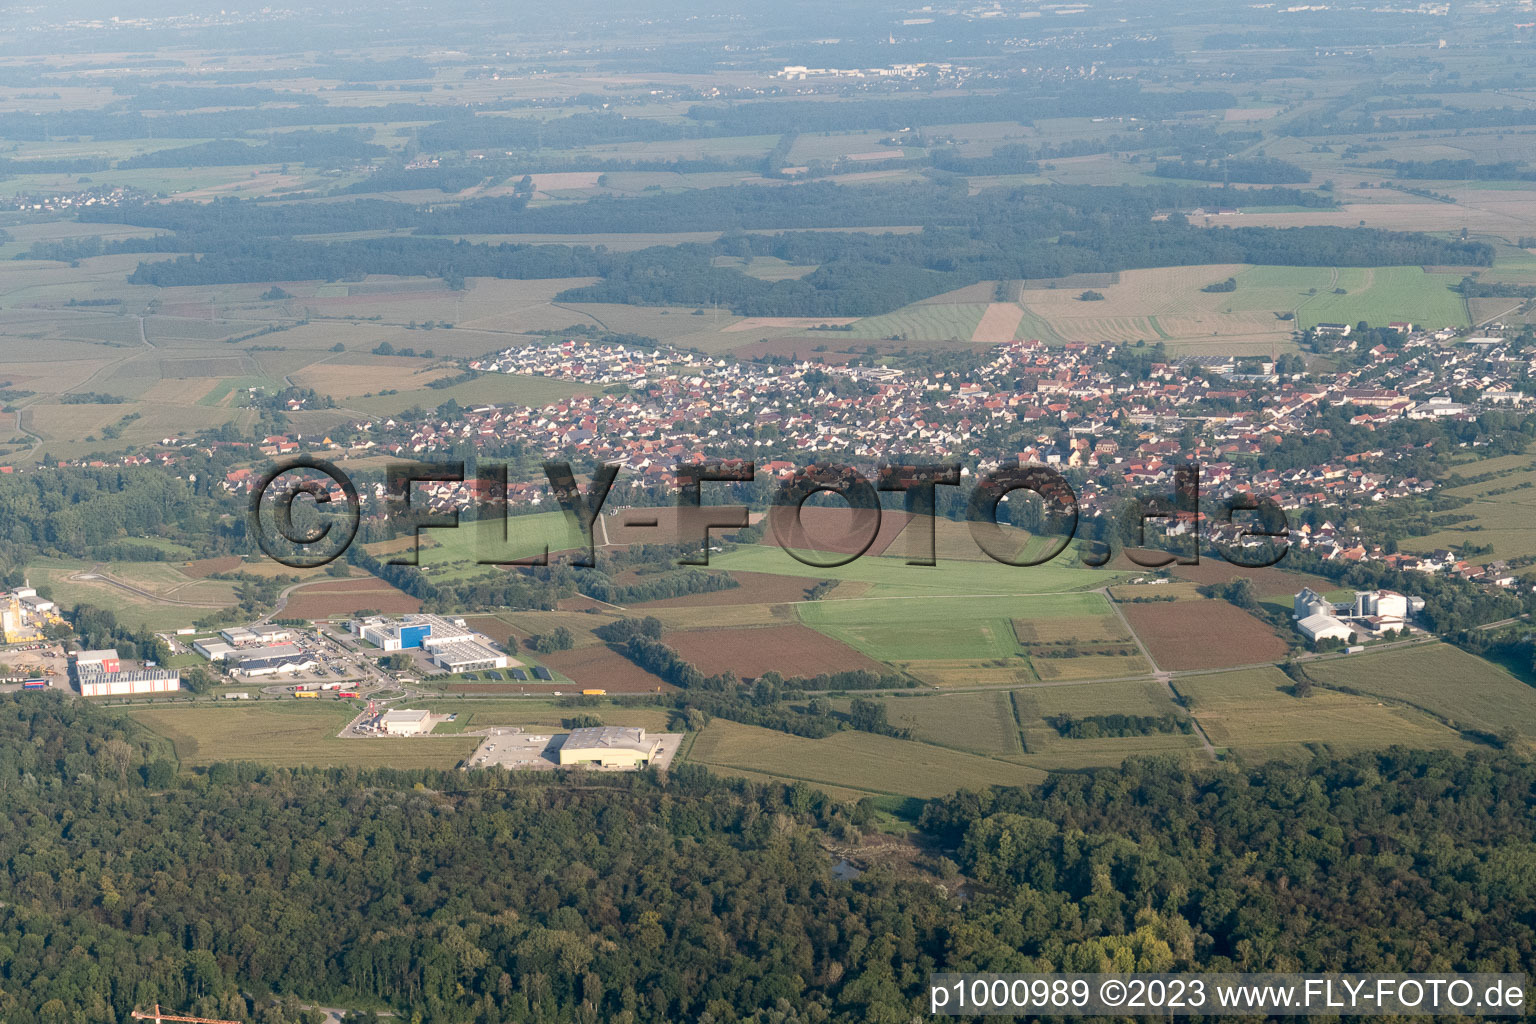 District Freistett in Rheinau in the state Baden-Wuerttemberg, Germany from the plane